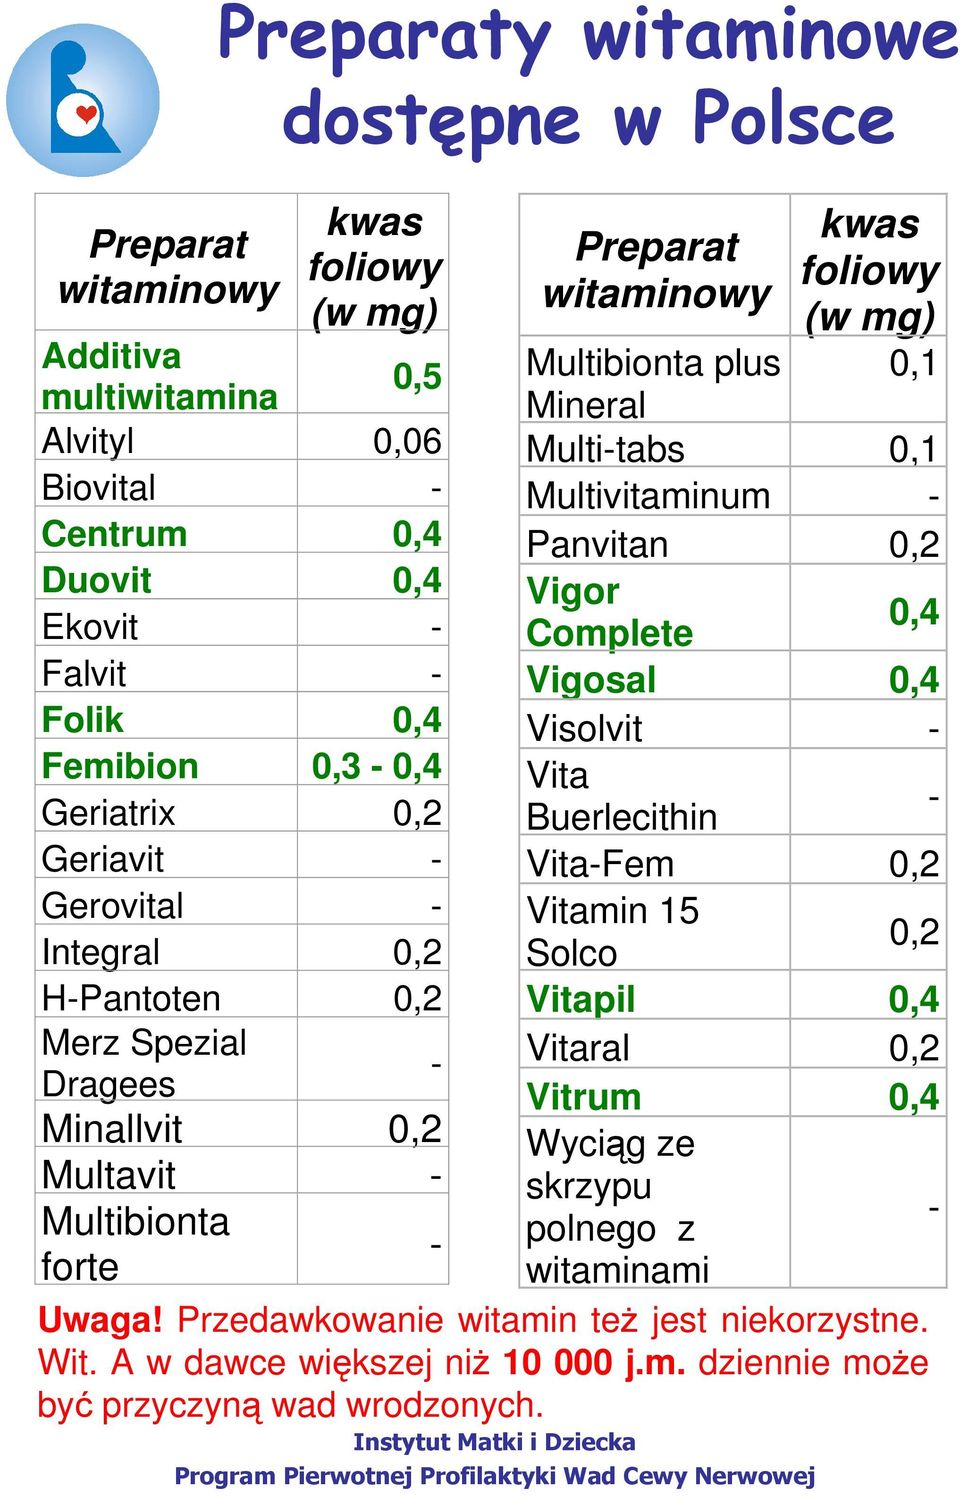 mg) 0,1 Multibionta plus Mineral Multi-tabs 0,1 Multivitaminum - Panvitan 0,2 Vigor 0,4 Complete Vigosal 0,4 Visolvit - Vita Buerlecithin - Vita-Fem 0,2 Vitamin 15 Solco 0,2 Vitapil 0,4